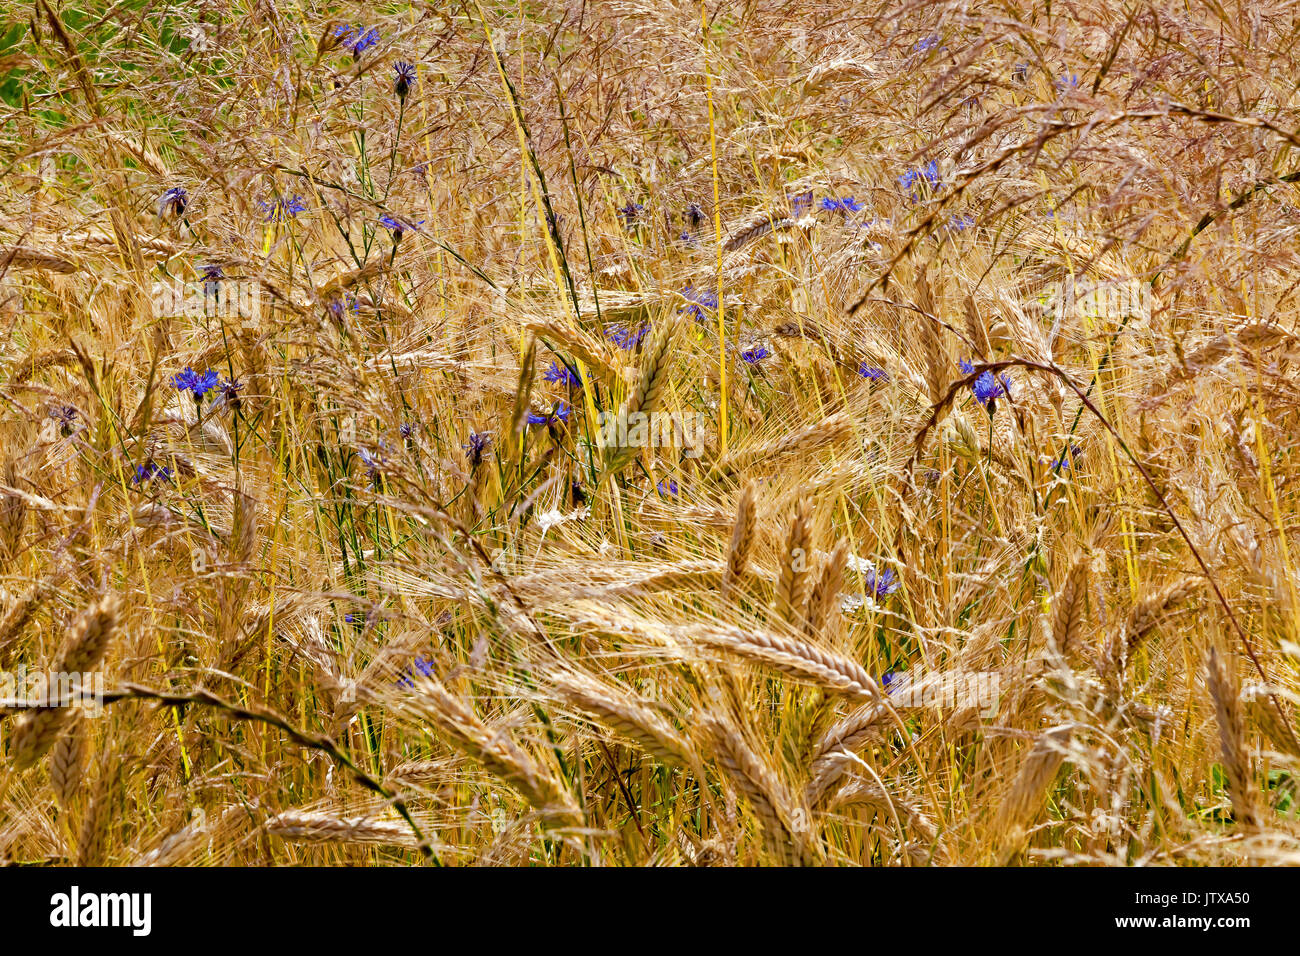 Blue Cornflowers (Centaurea cyanus) in the golden field of corn. Stock Photo